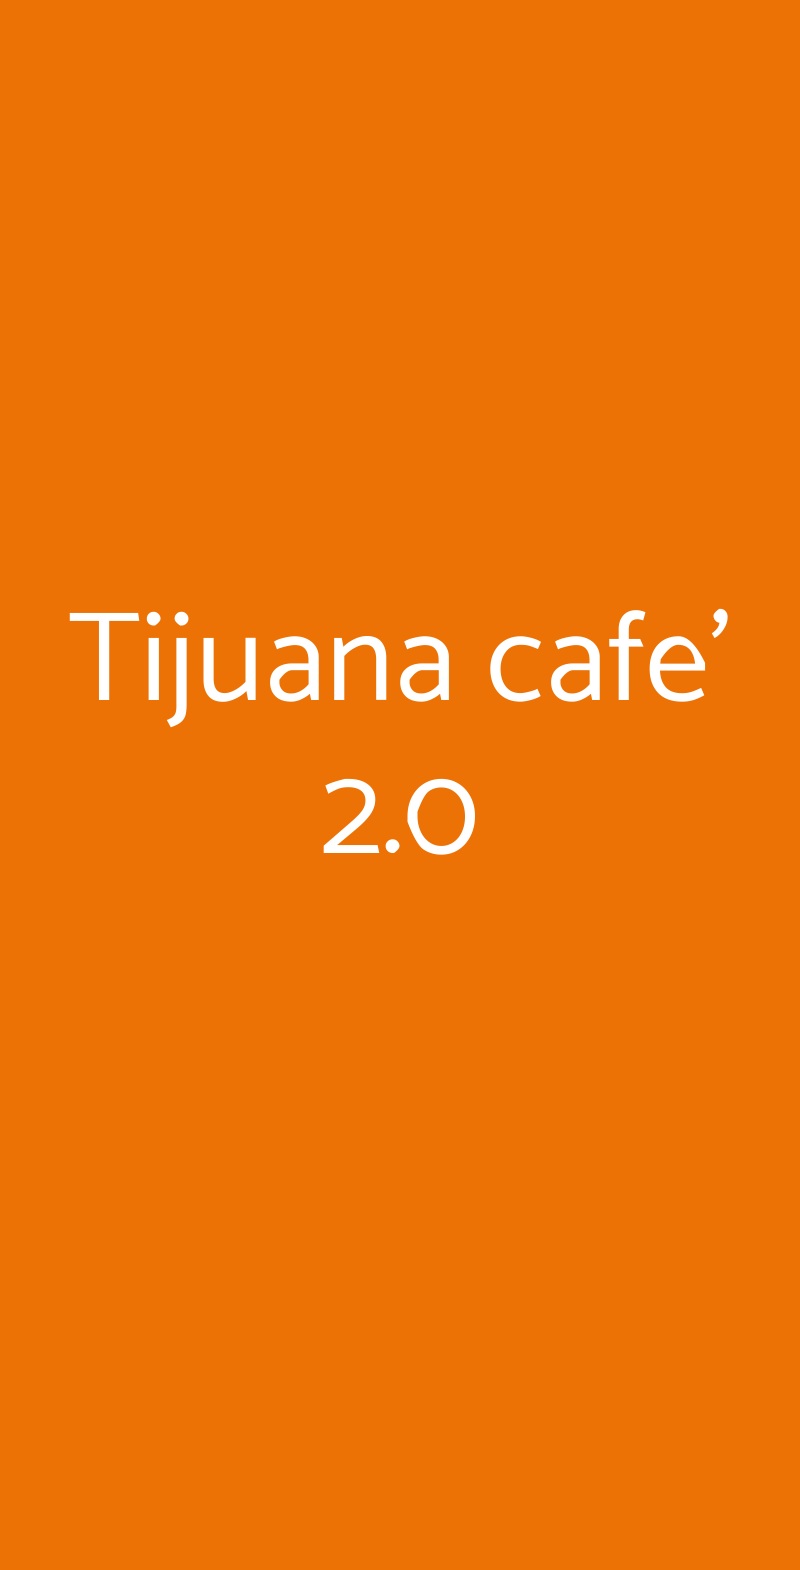 Tijuana cafe' 2.0 Milano menù 1 pagina